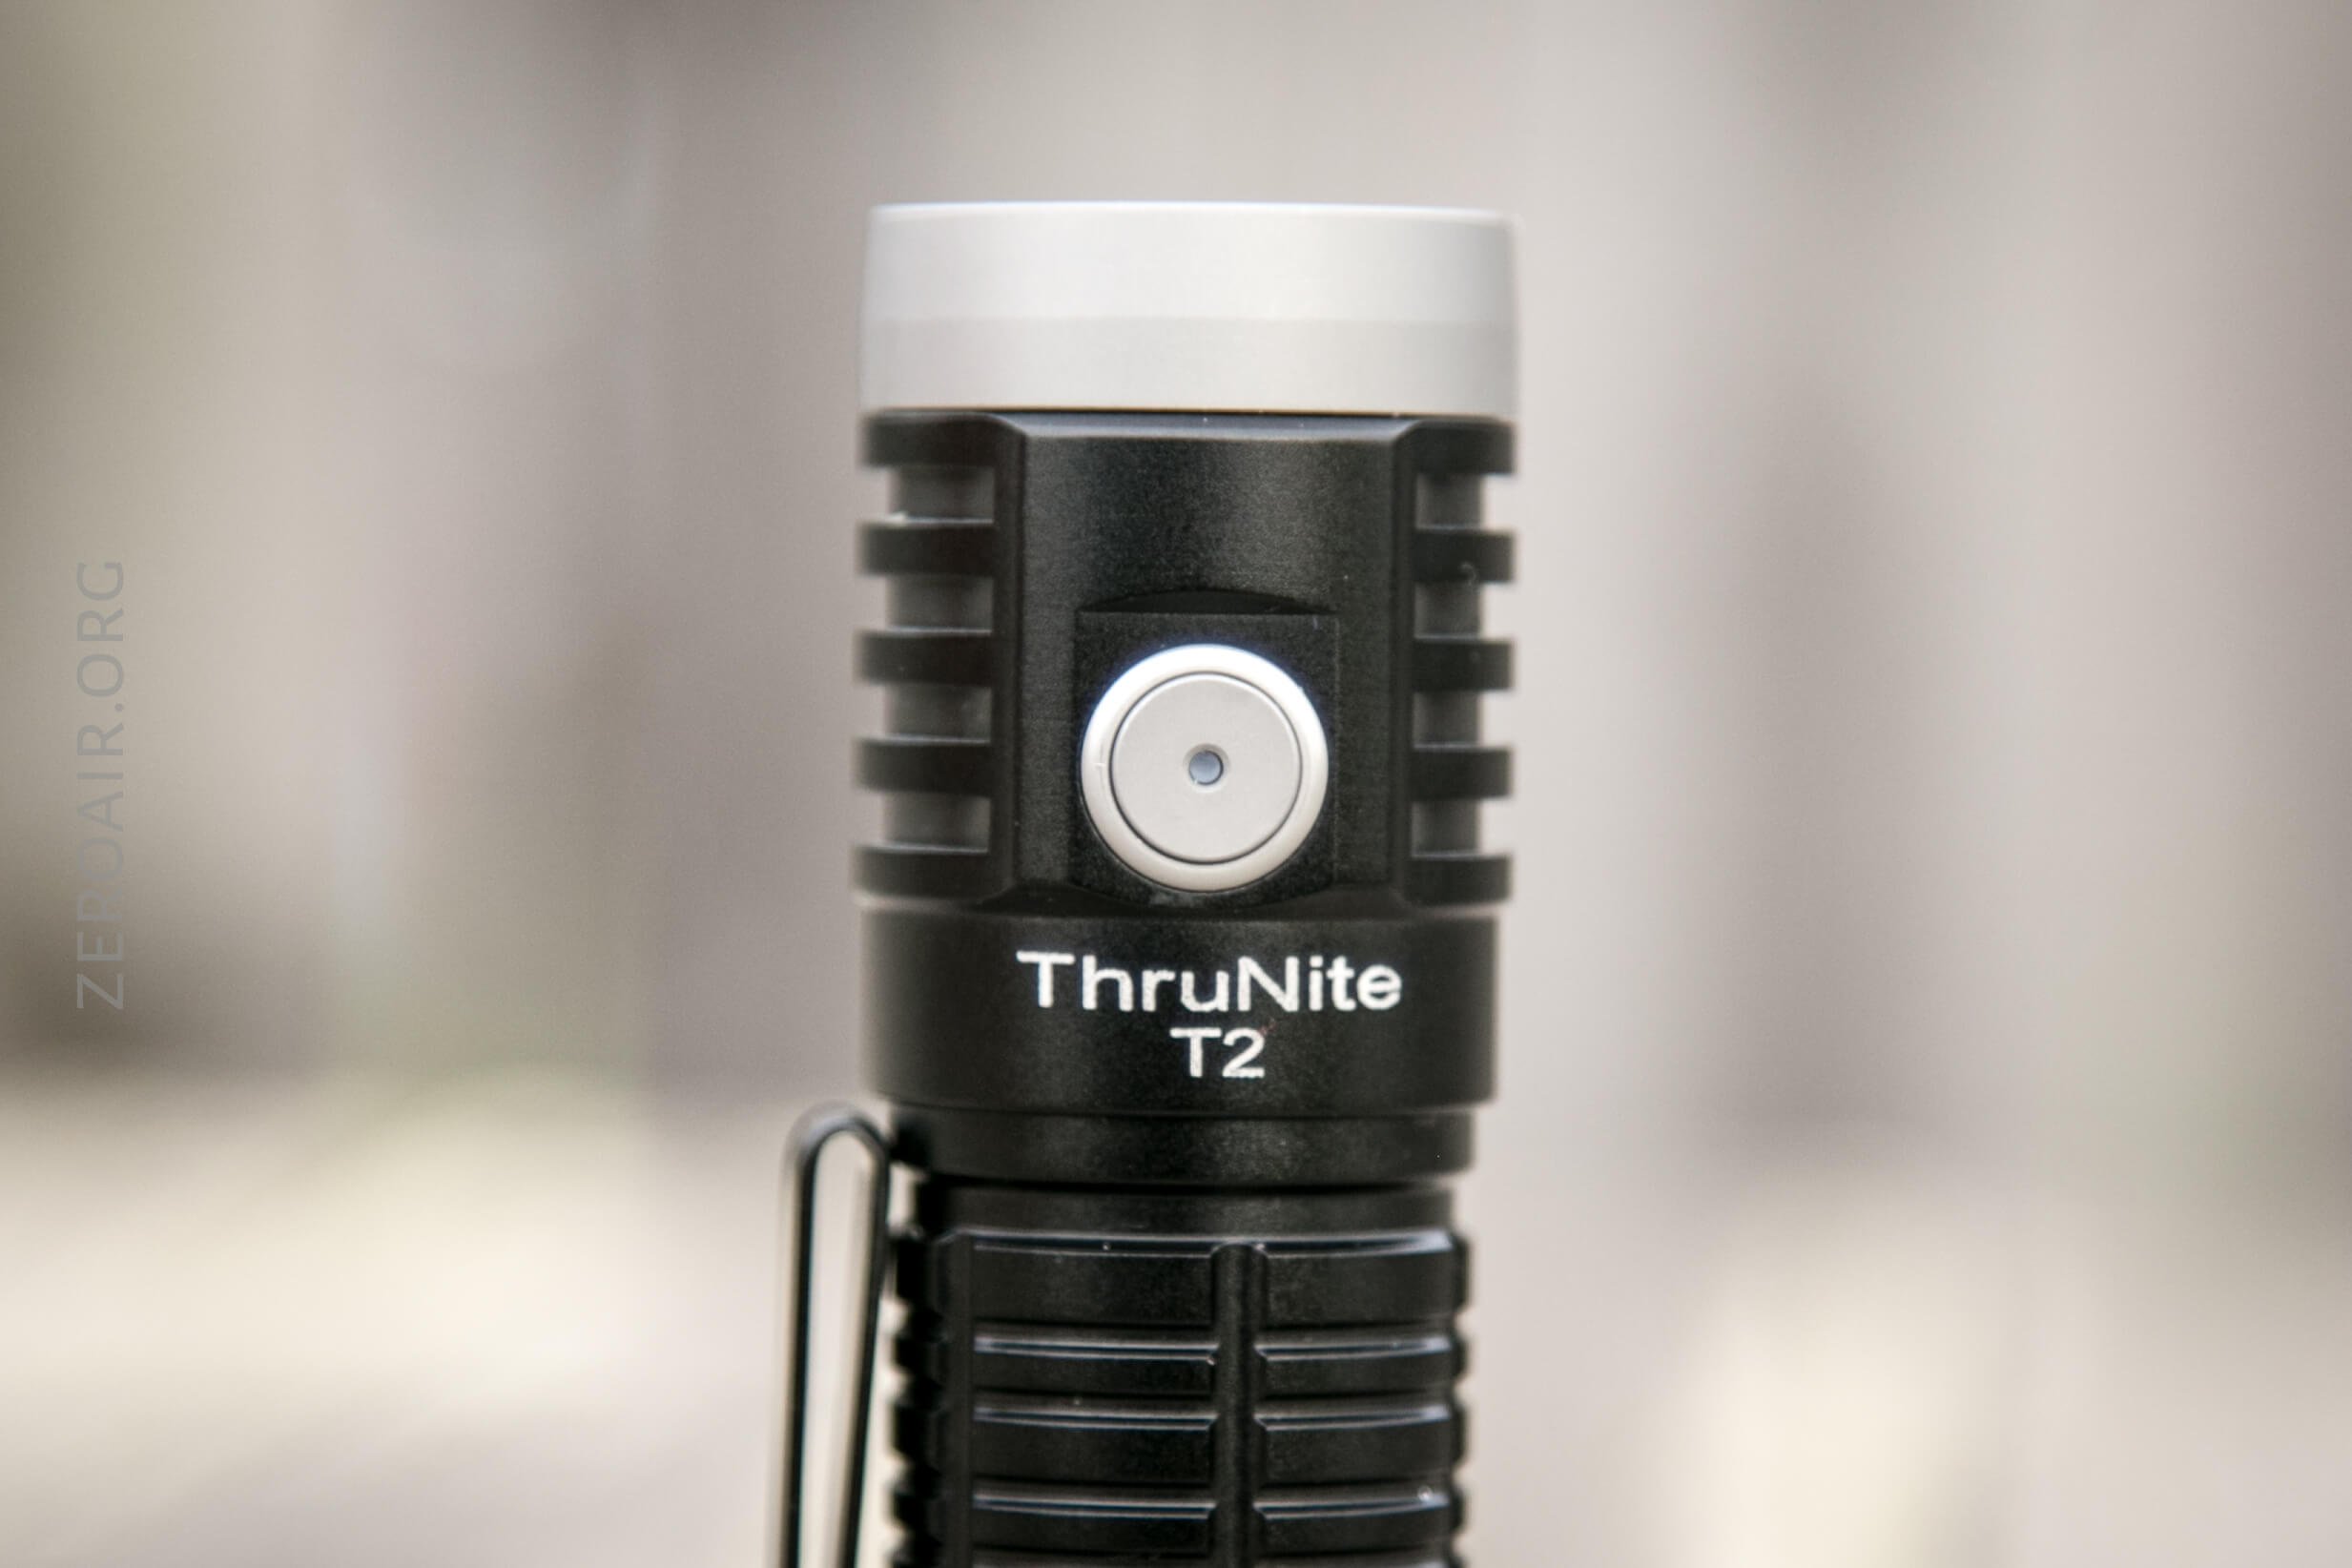 Thrunite T2 Flashlight